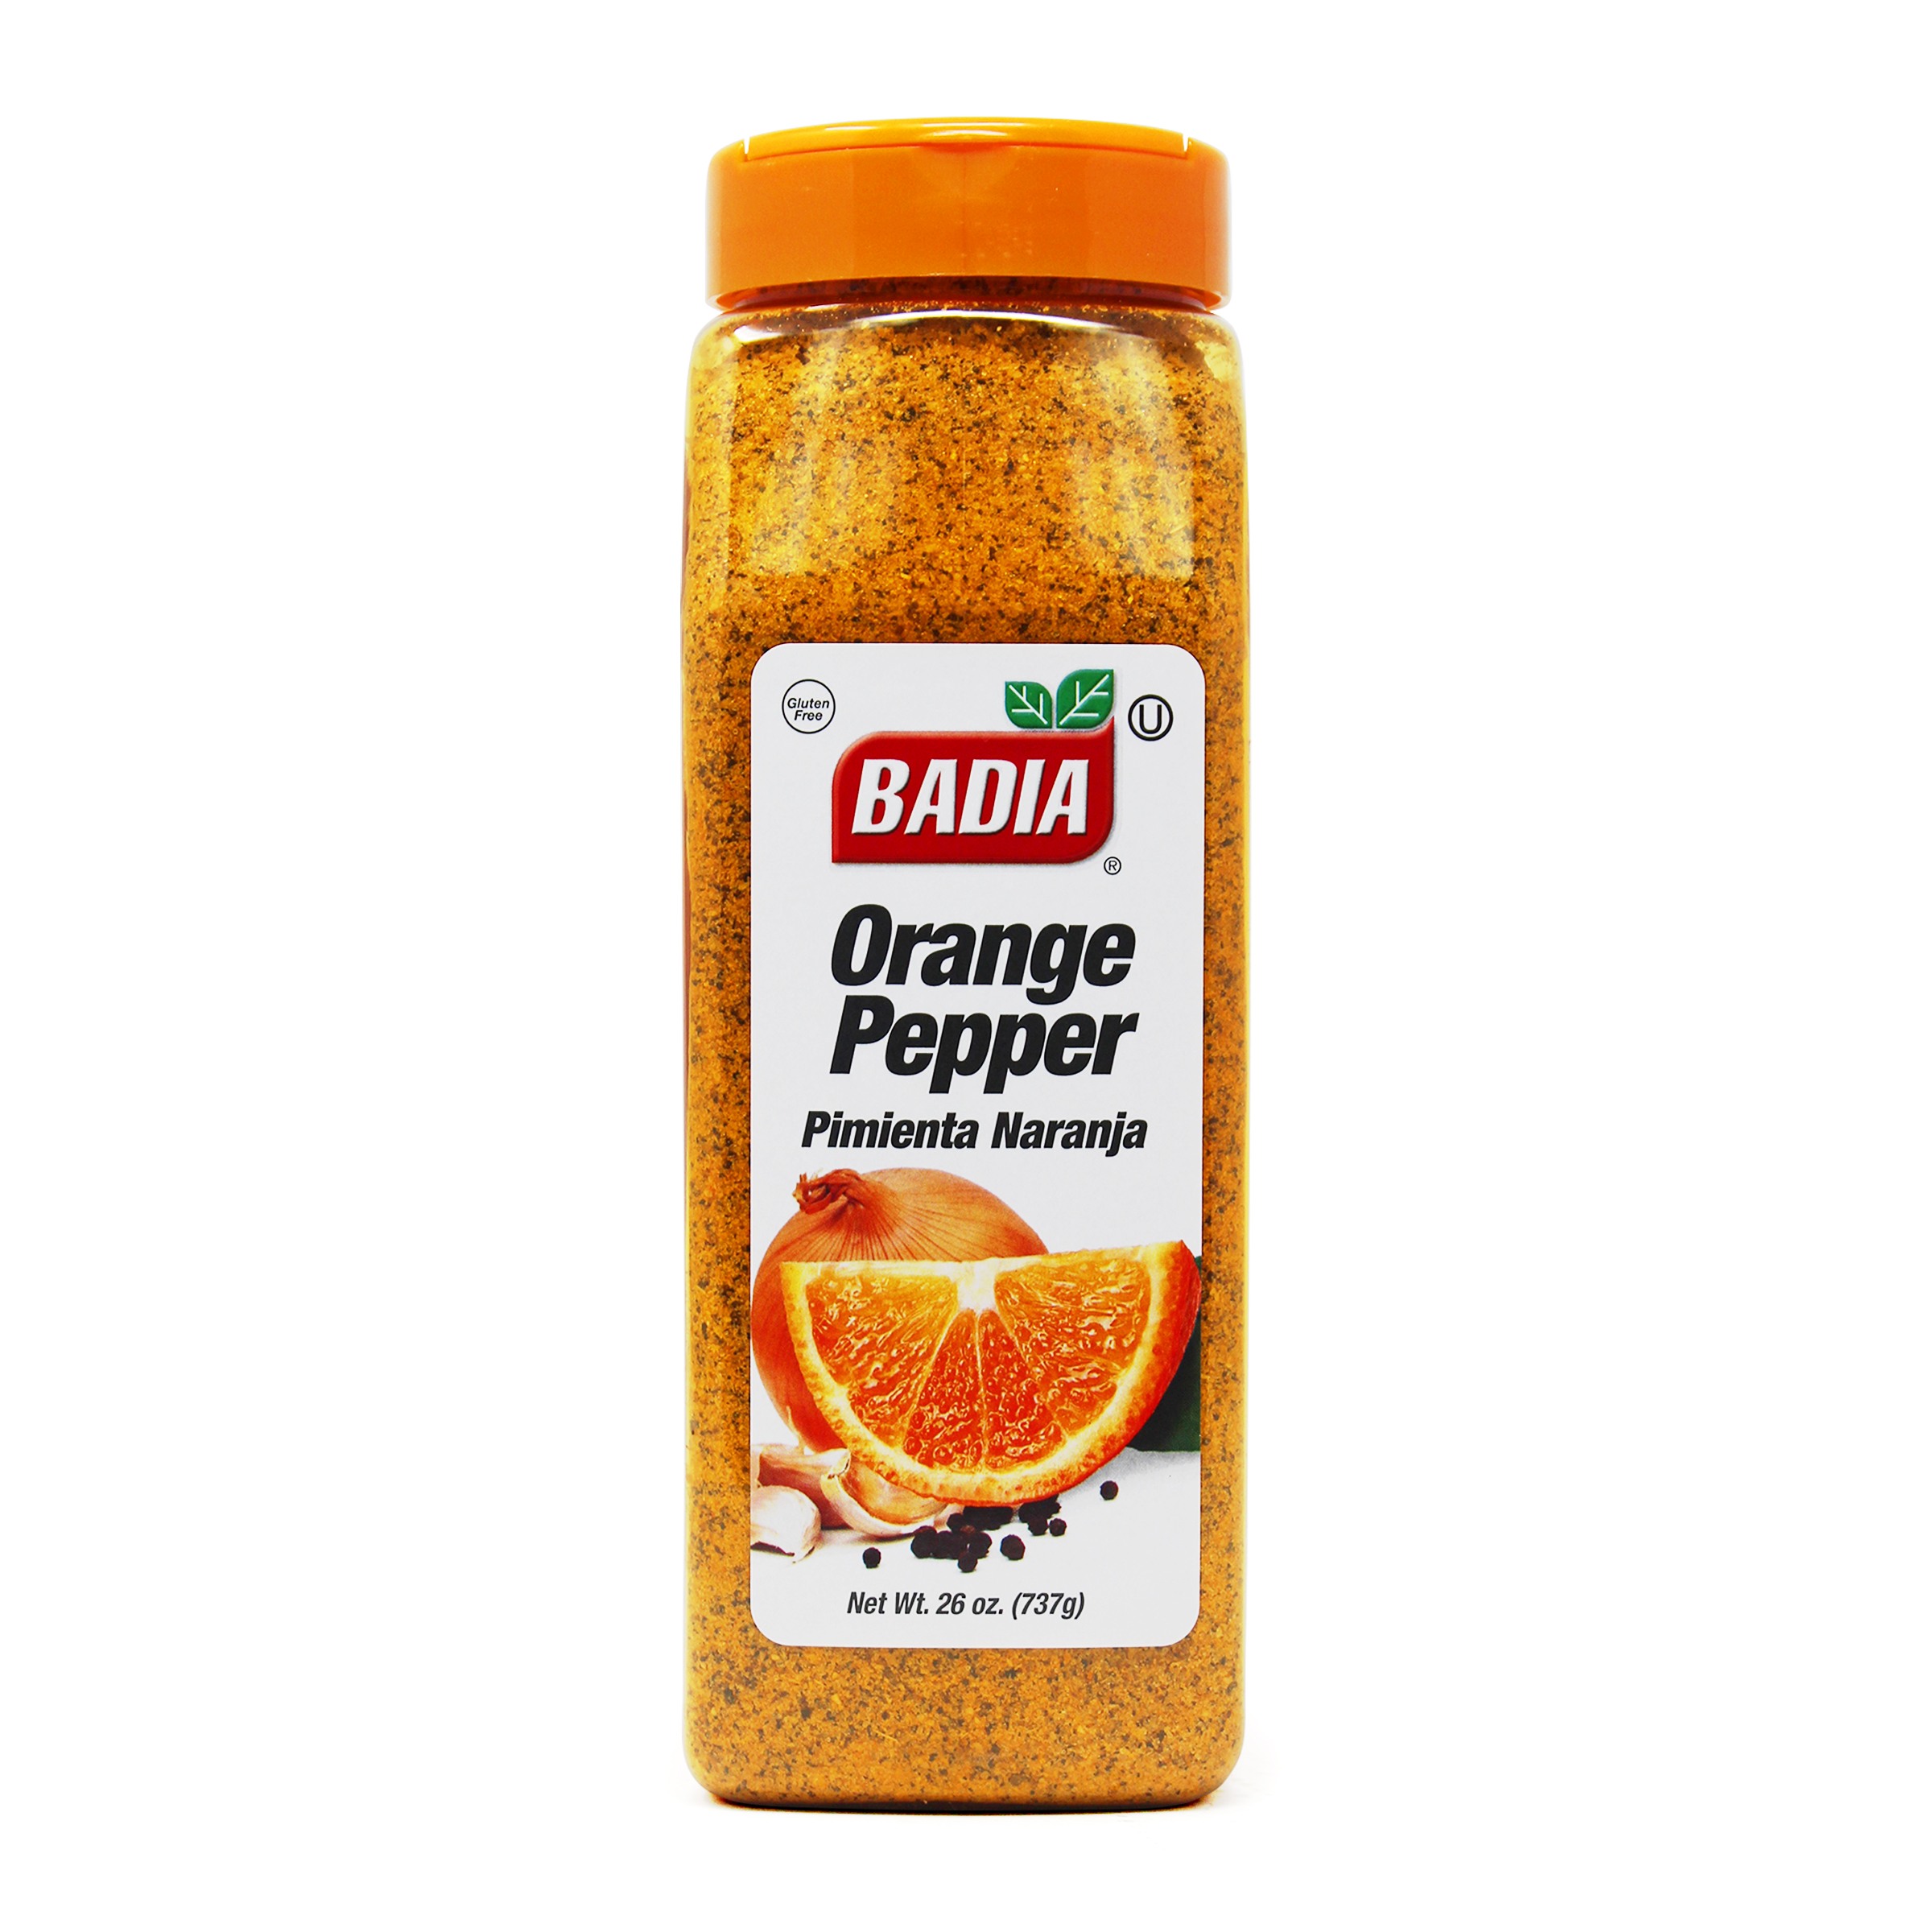 2 x BADIA - Orange Pepper 26 oz - Sazonador Pimienta y Naranja